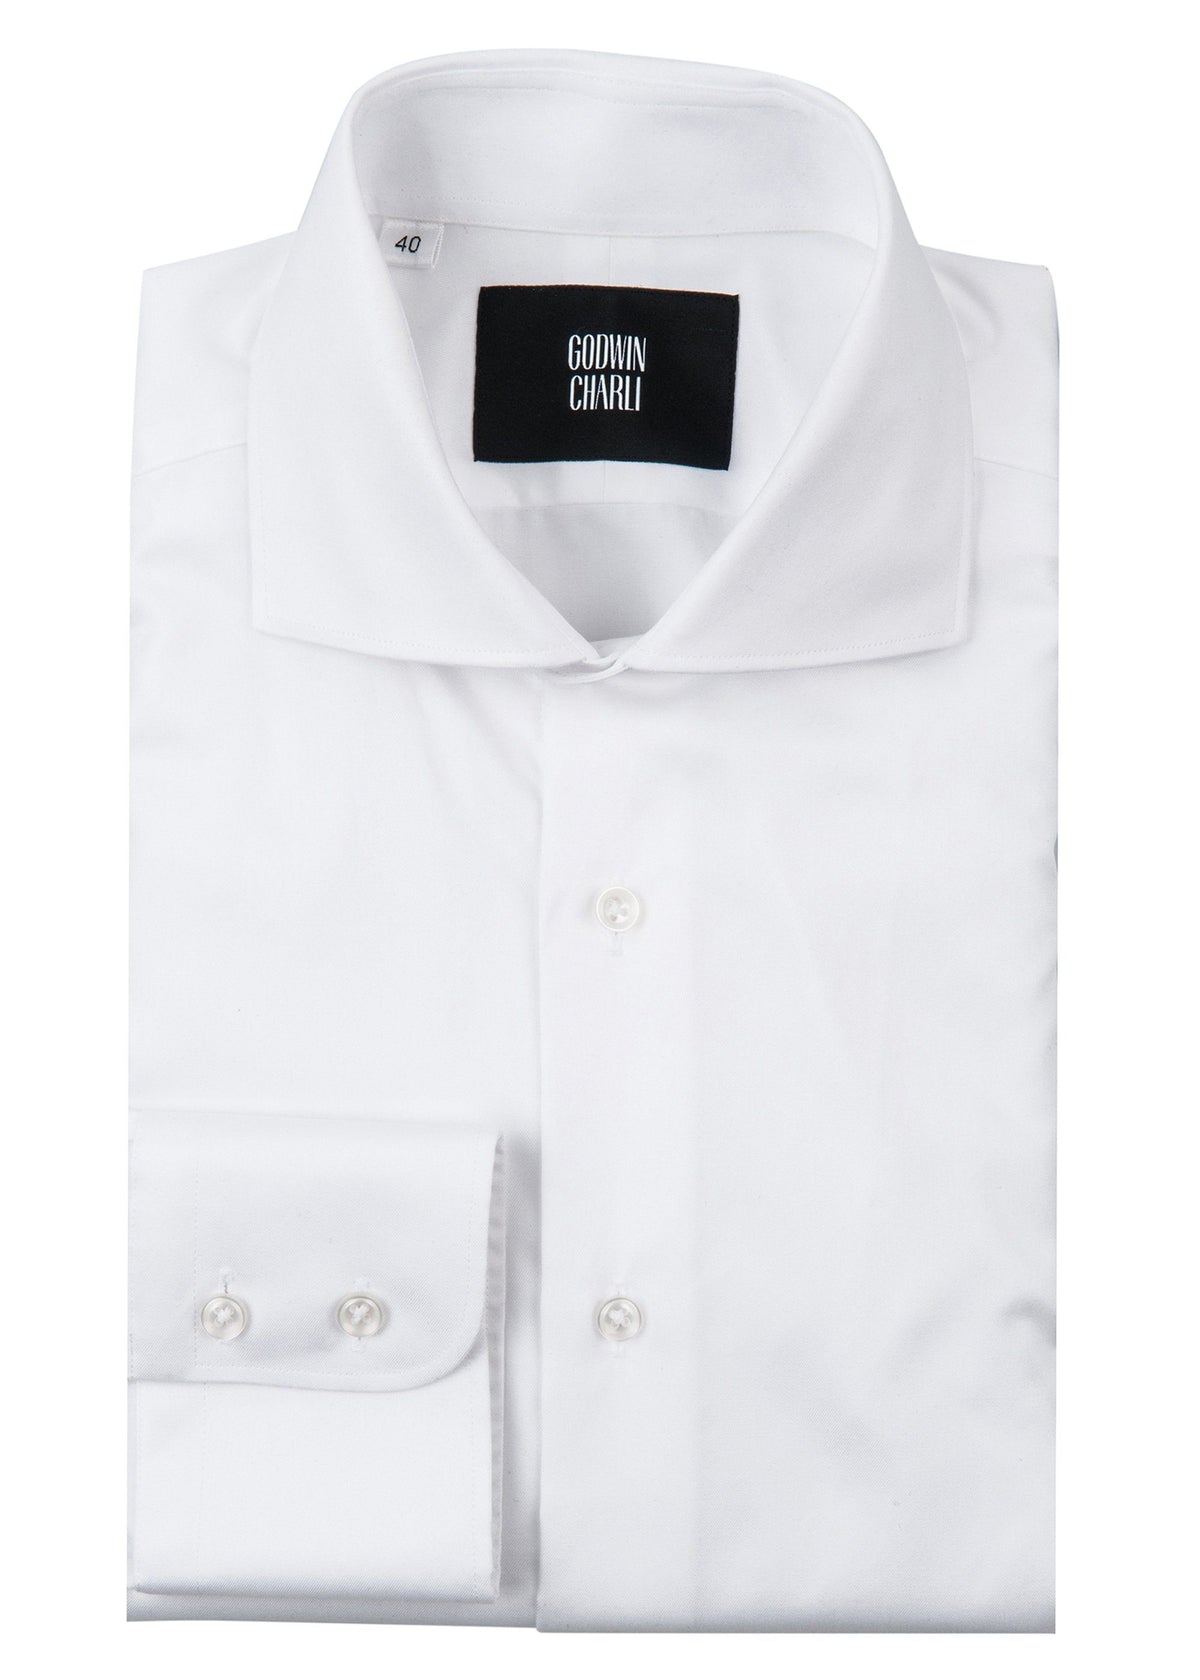 Pilot (BC) Shirt - White Twill